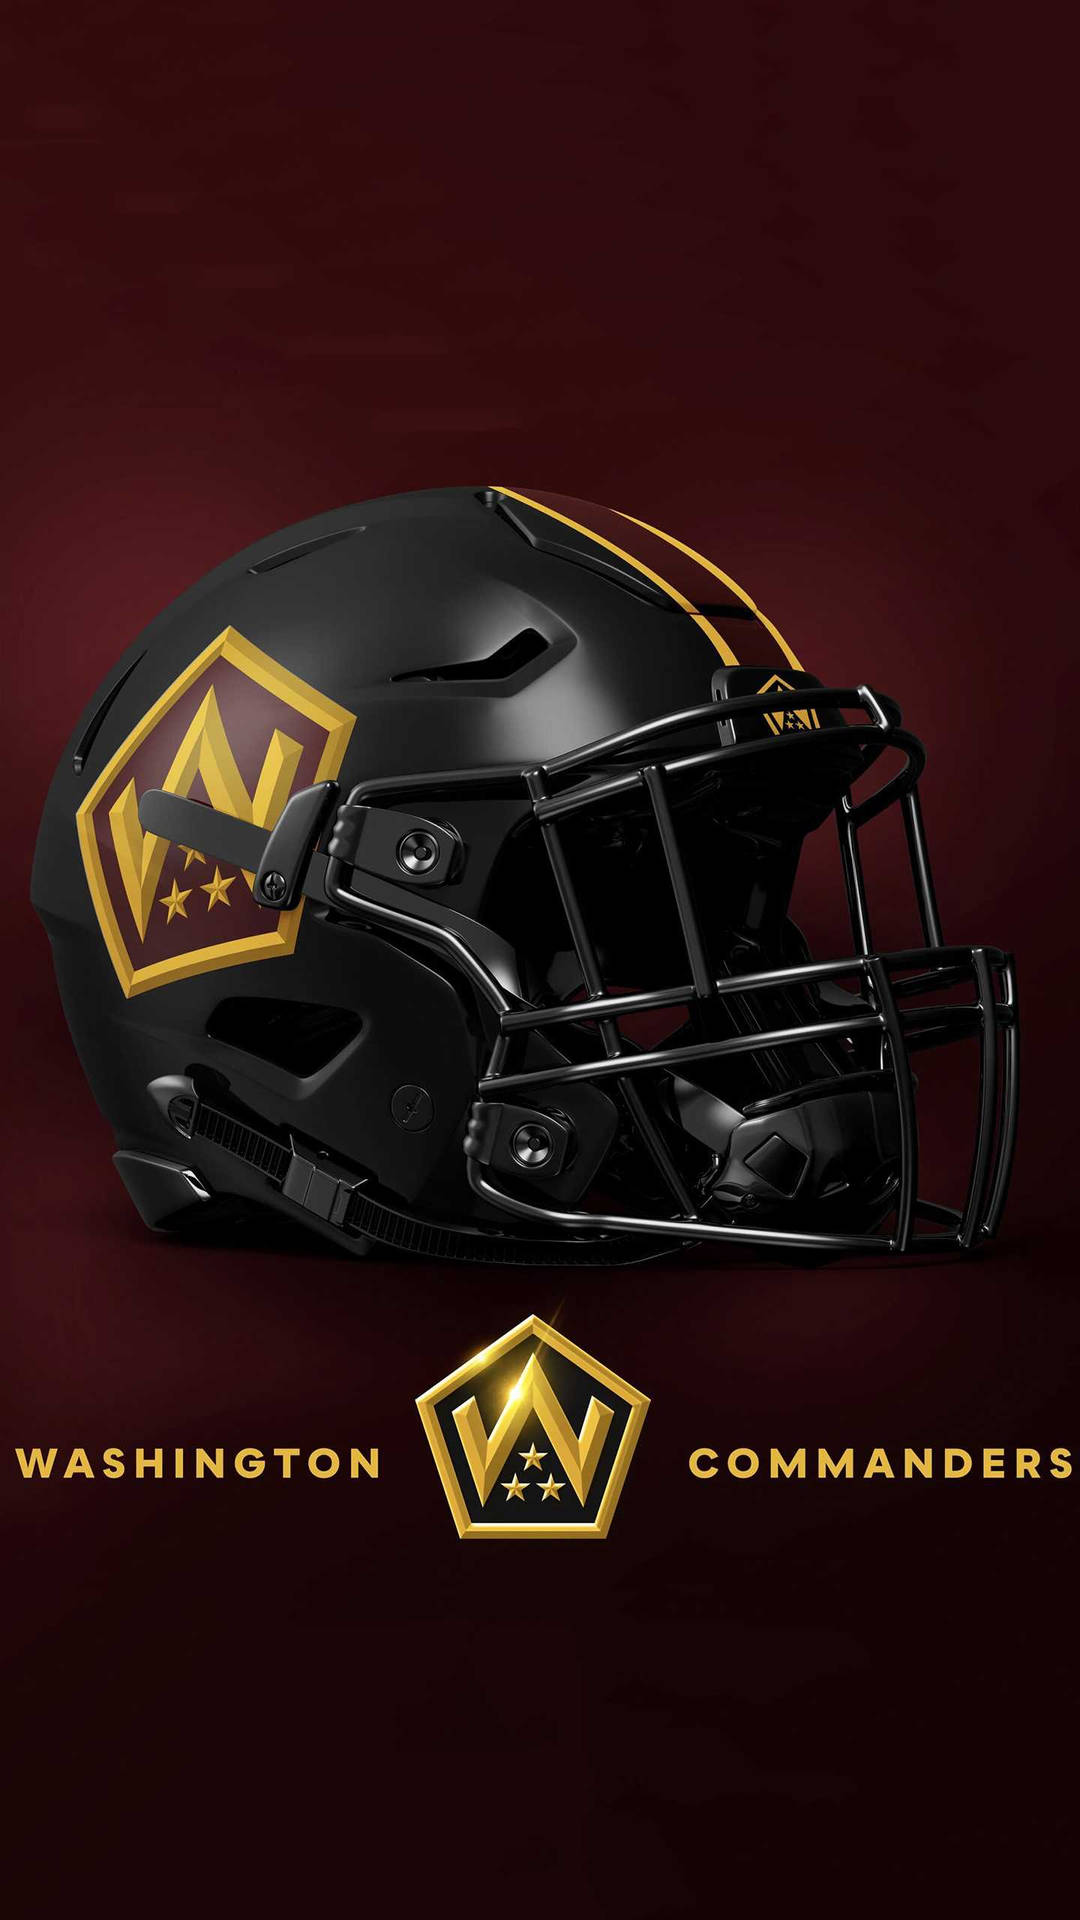 Washington Commanders Football Helmet Wallpaper